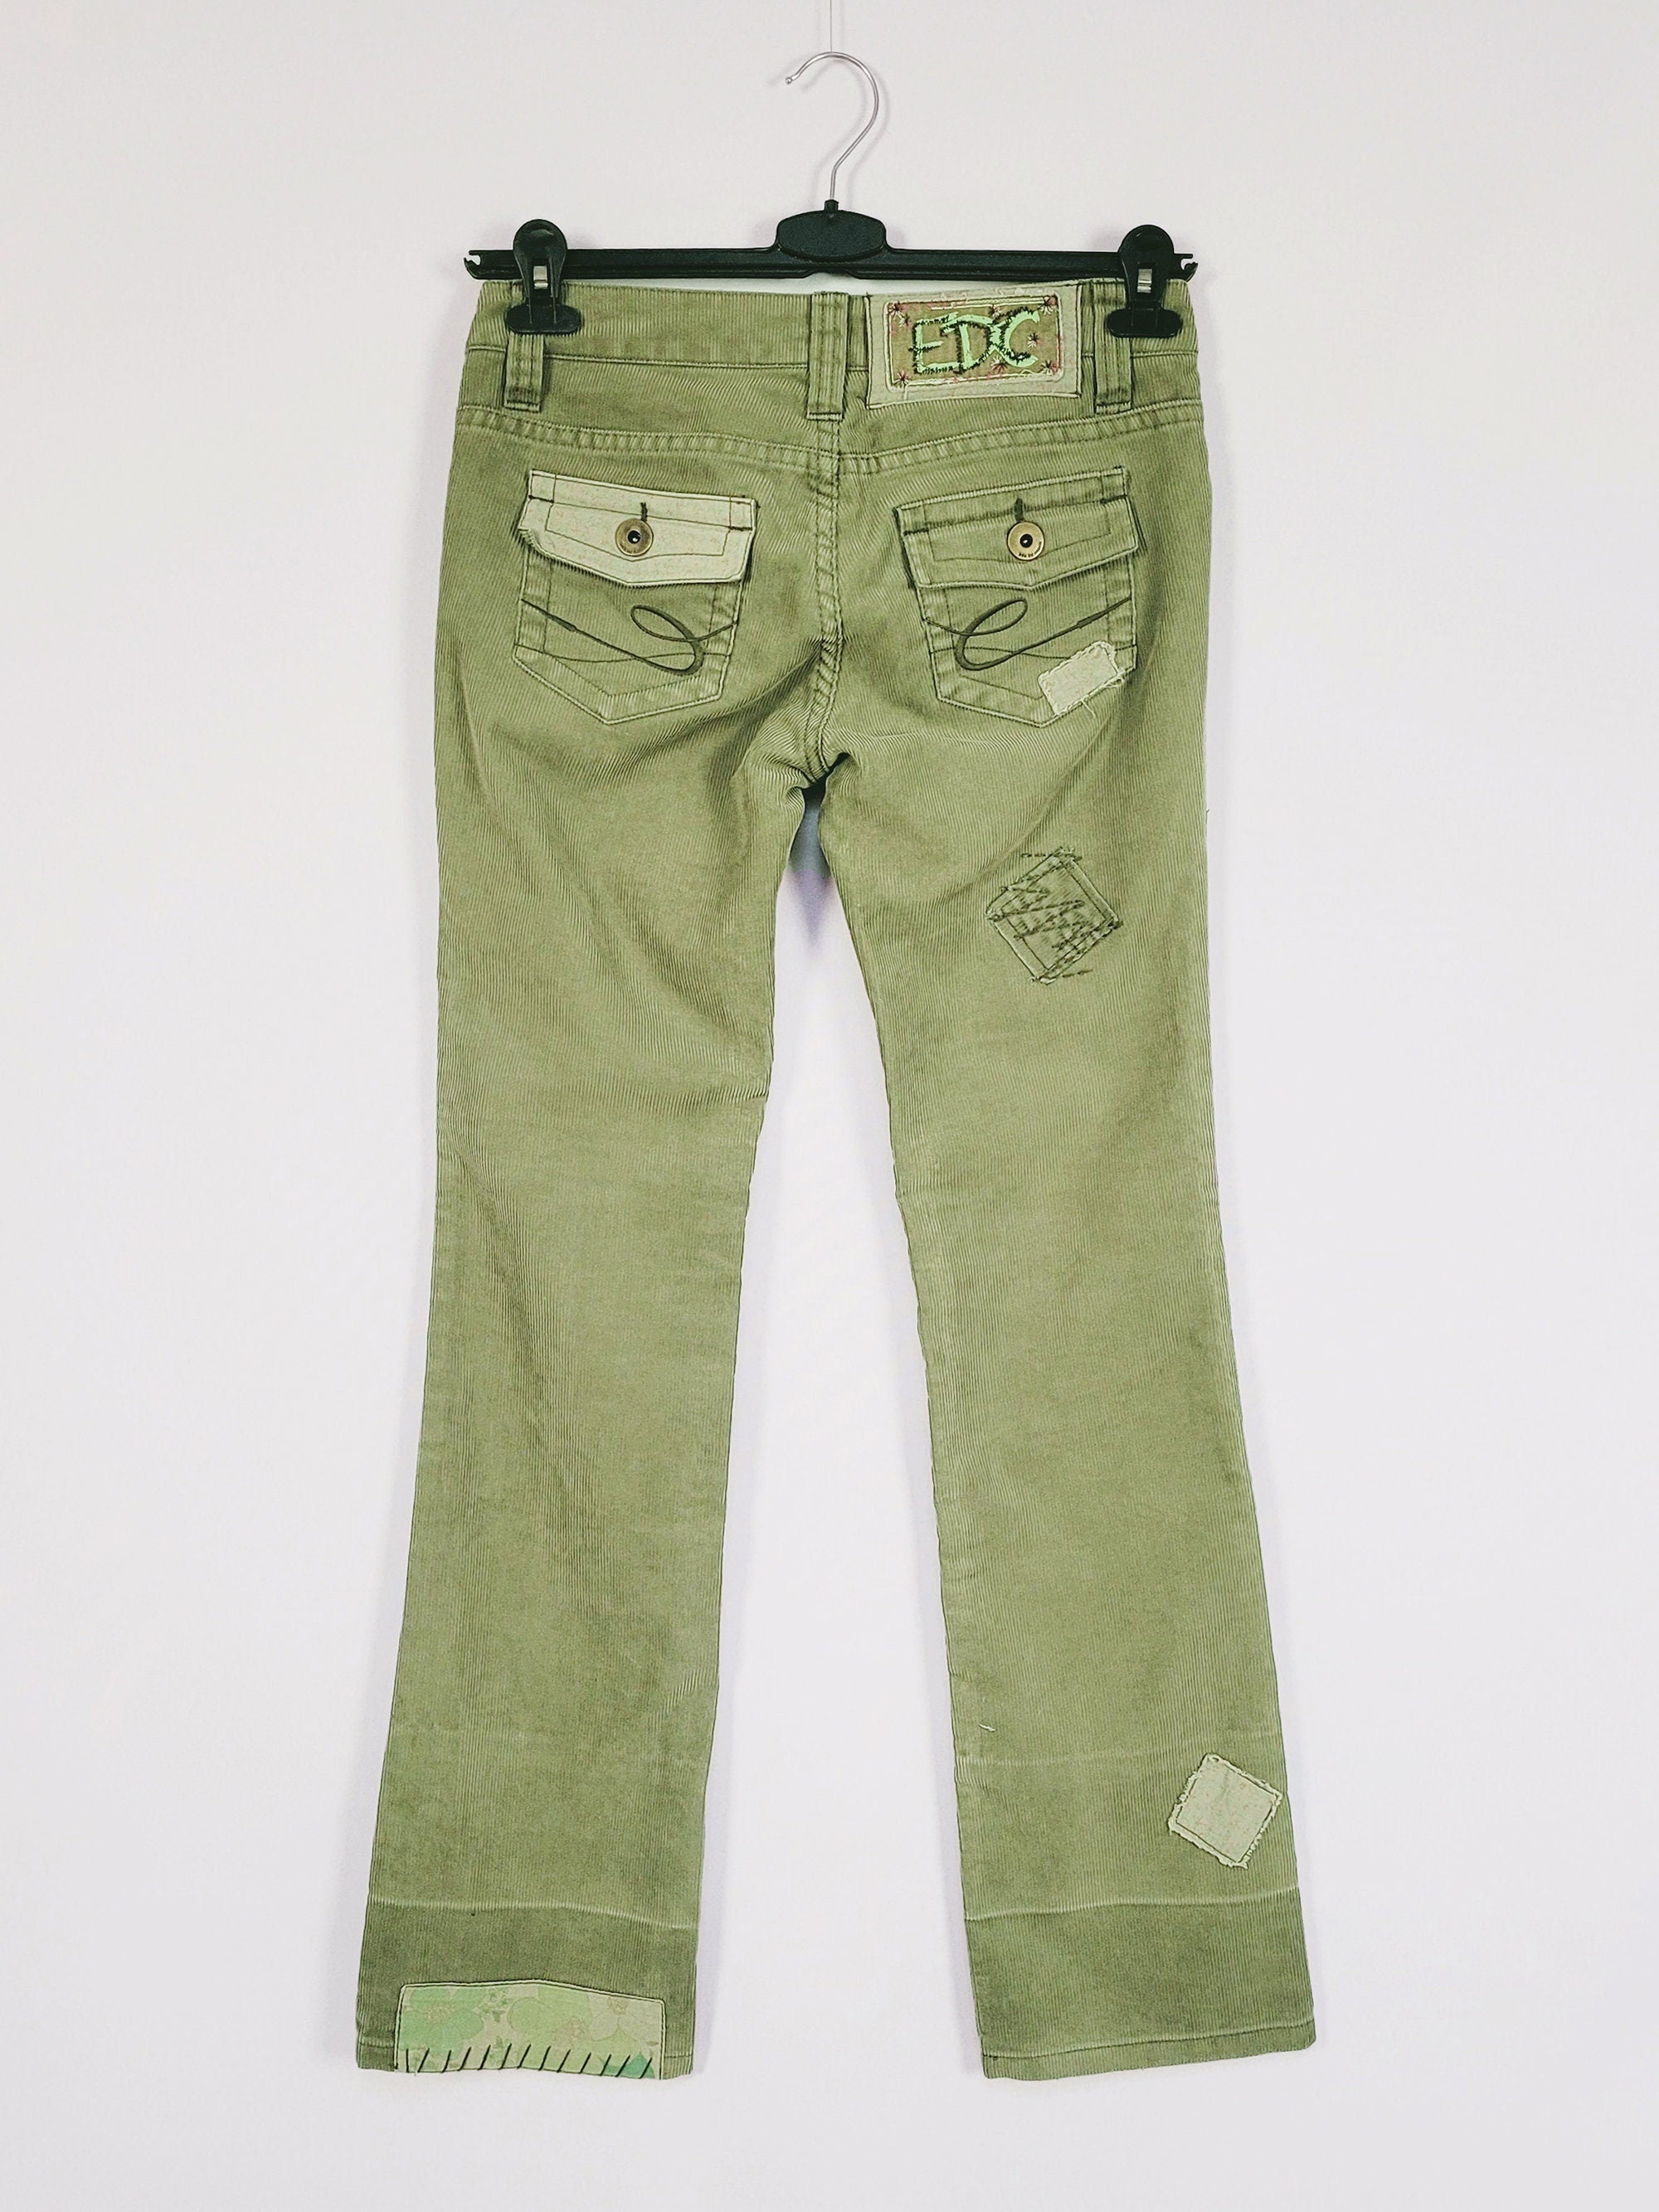 90s retro esprit olive green corduroy low waist flare pants